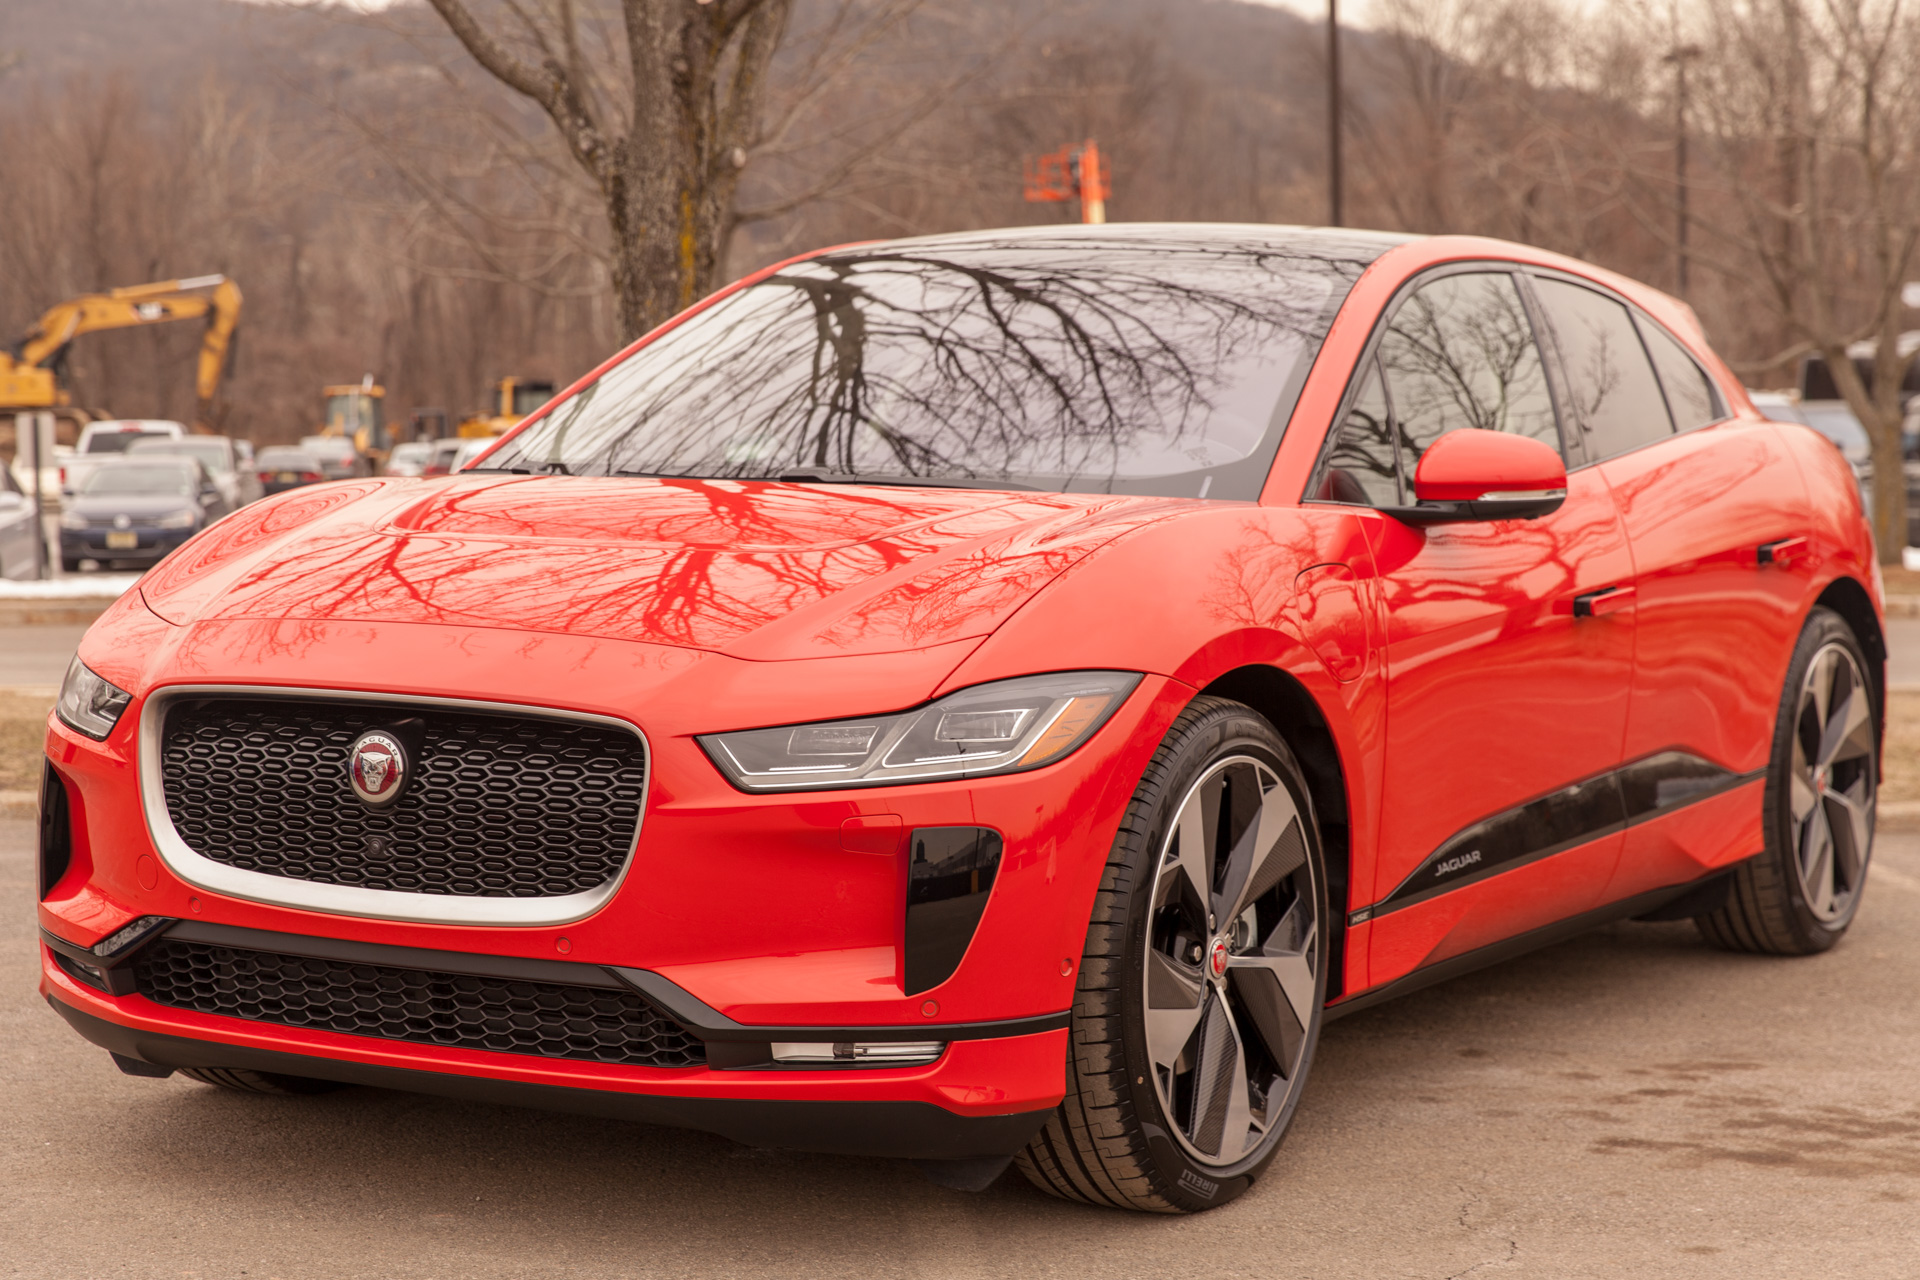 Jaguar I-Pace style, all-electric Smart, 2018 Nissan Leaf charging, EPA ...